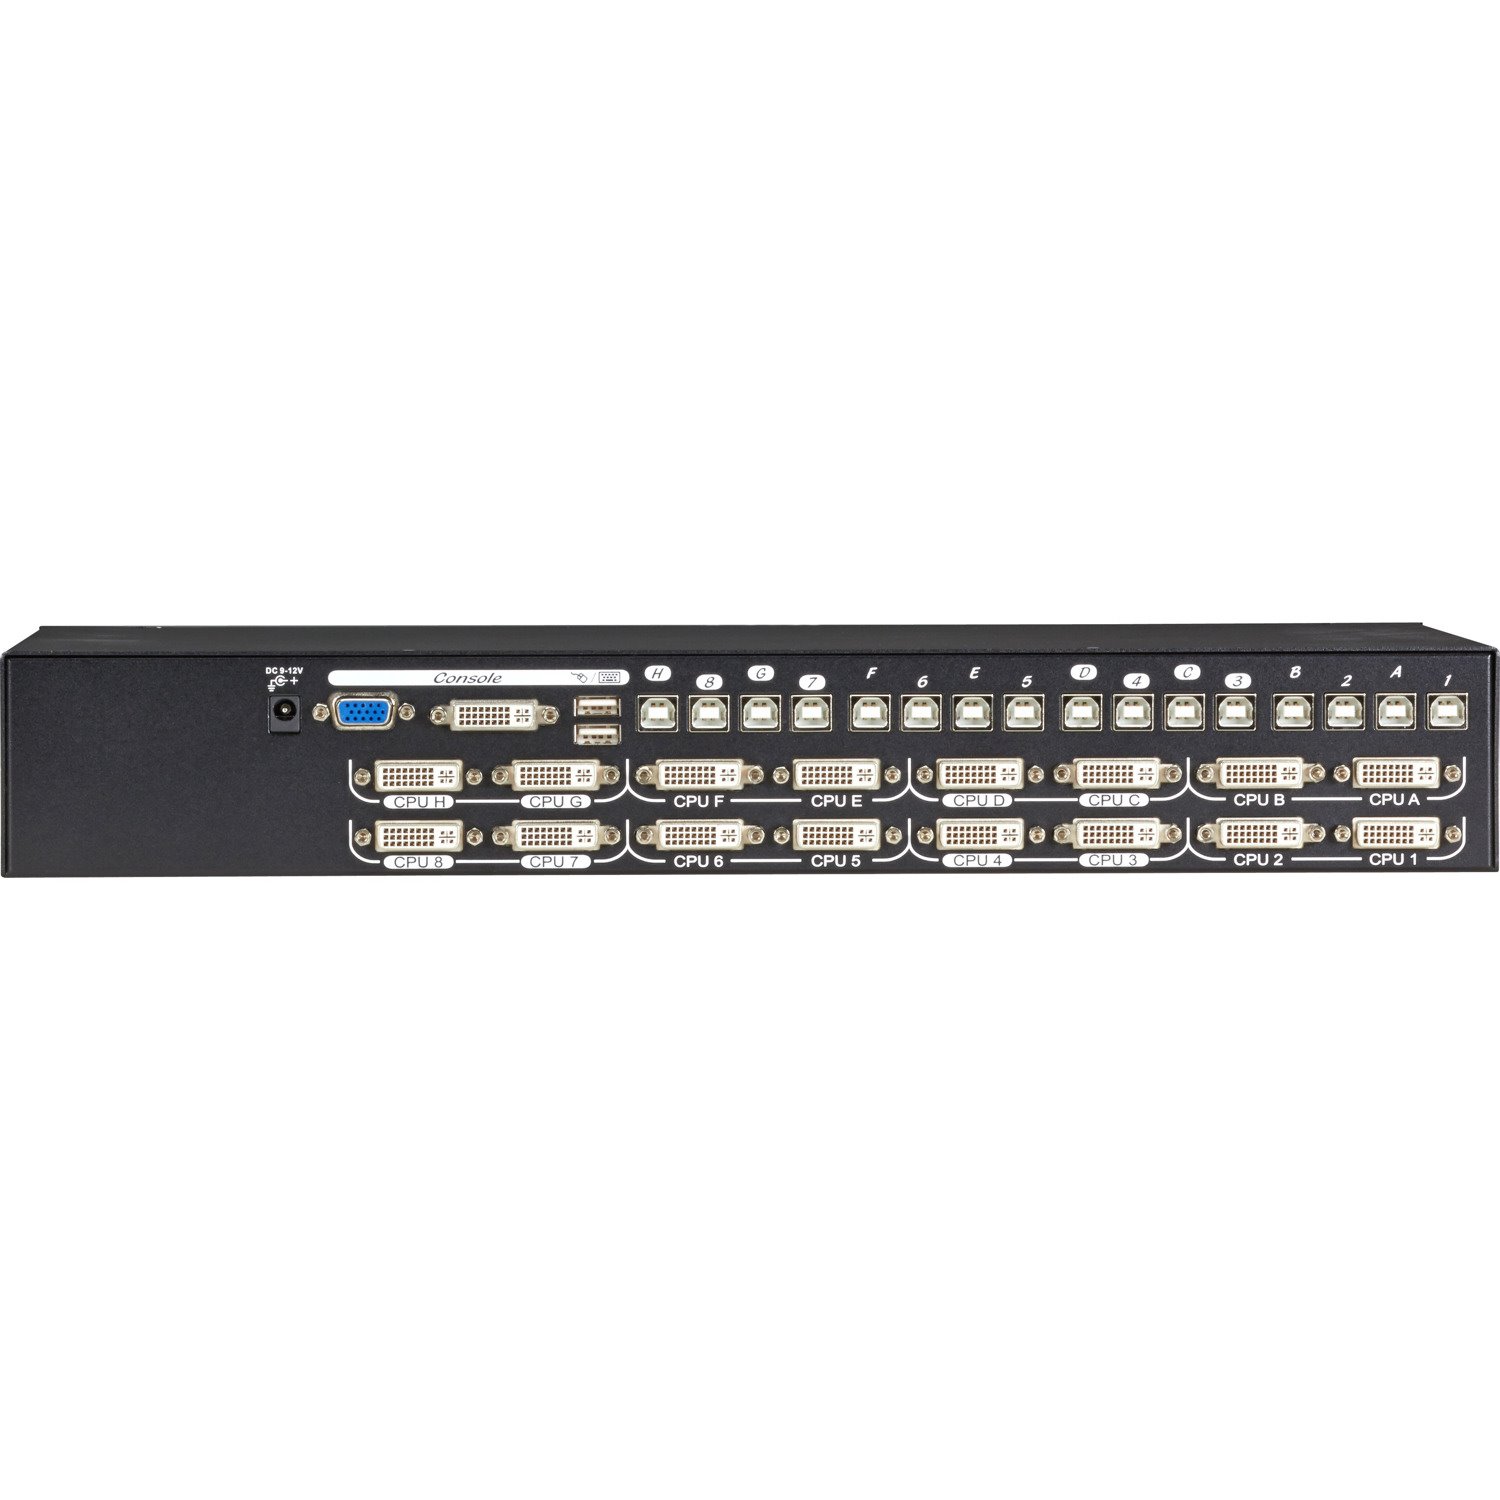 Black Box ServSwitch EC for DVI + USB Servers and DVI + USB Console, 16-Port